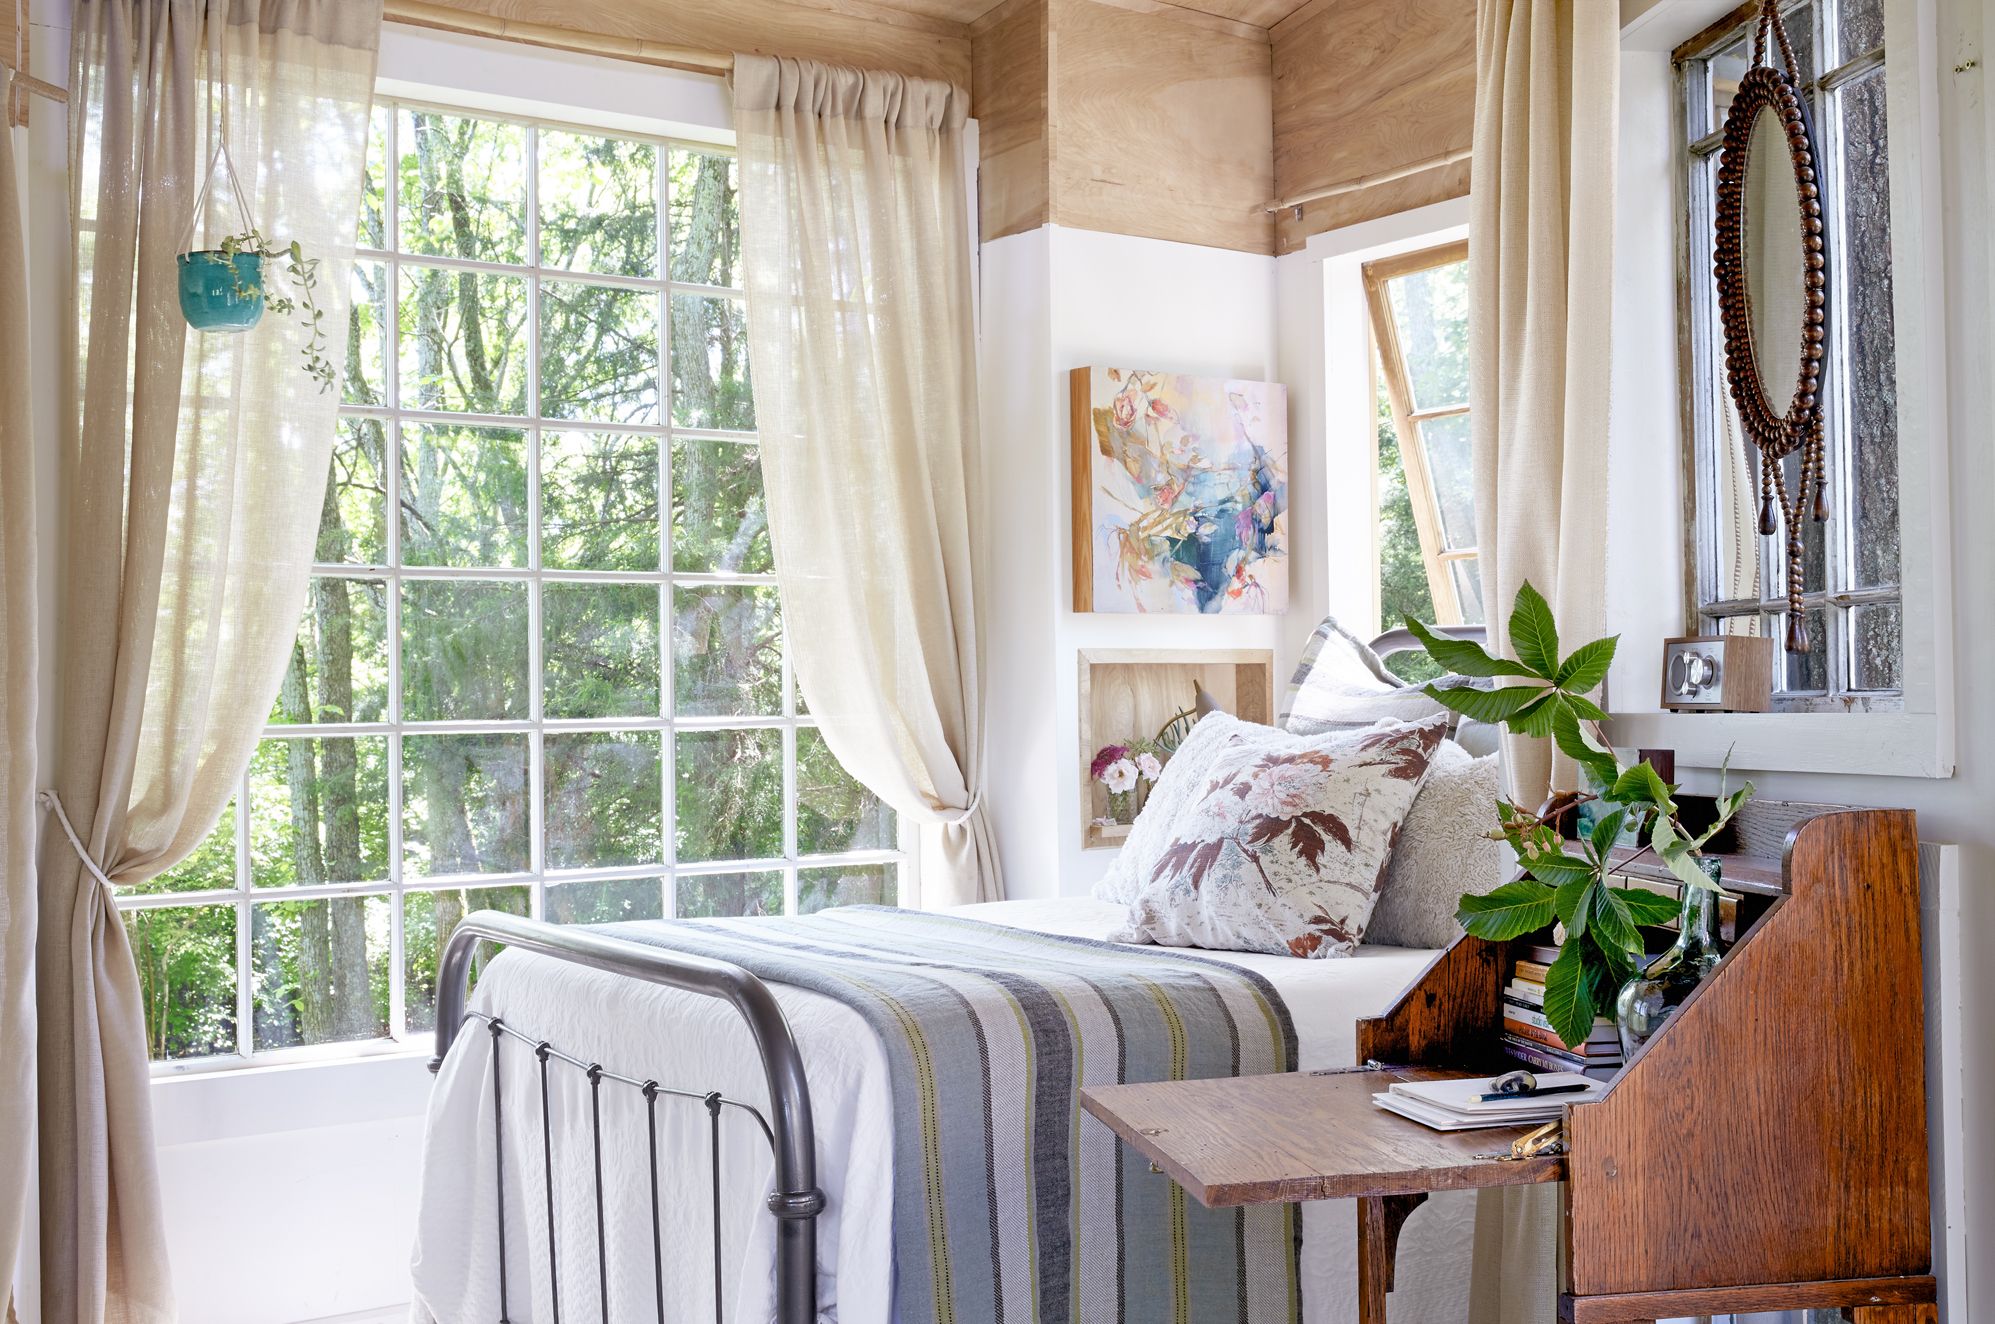 7 Muji style bedroom Ideas you'll love: Minimalism meets Zen